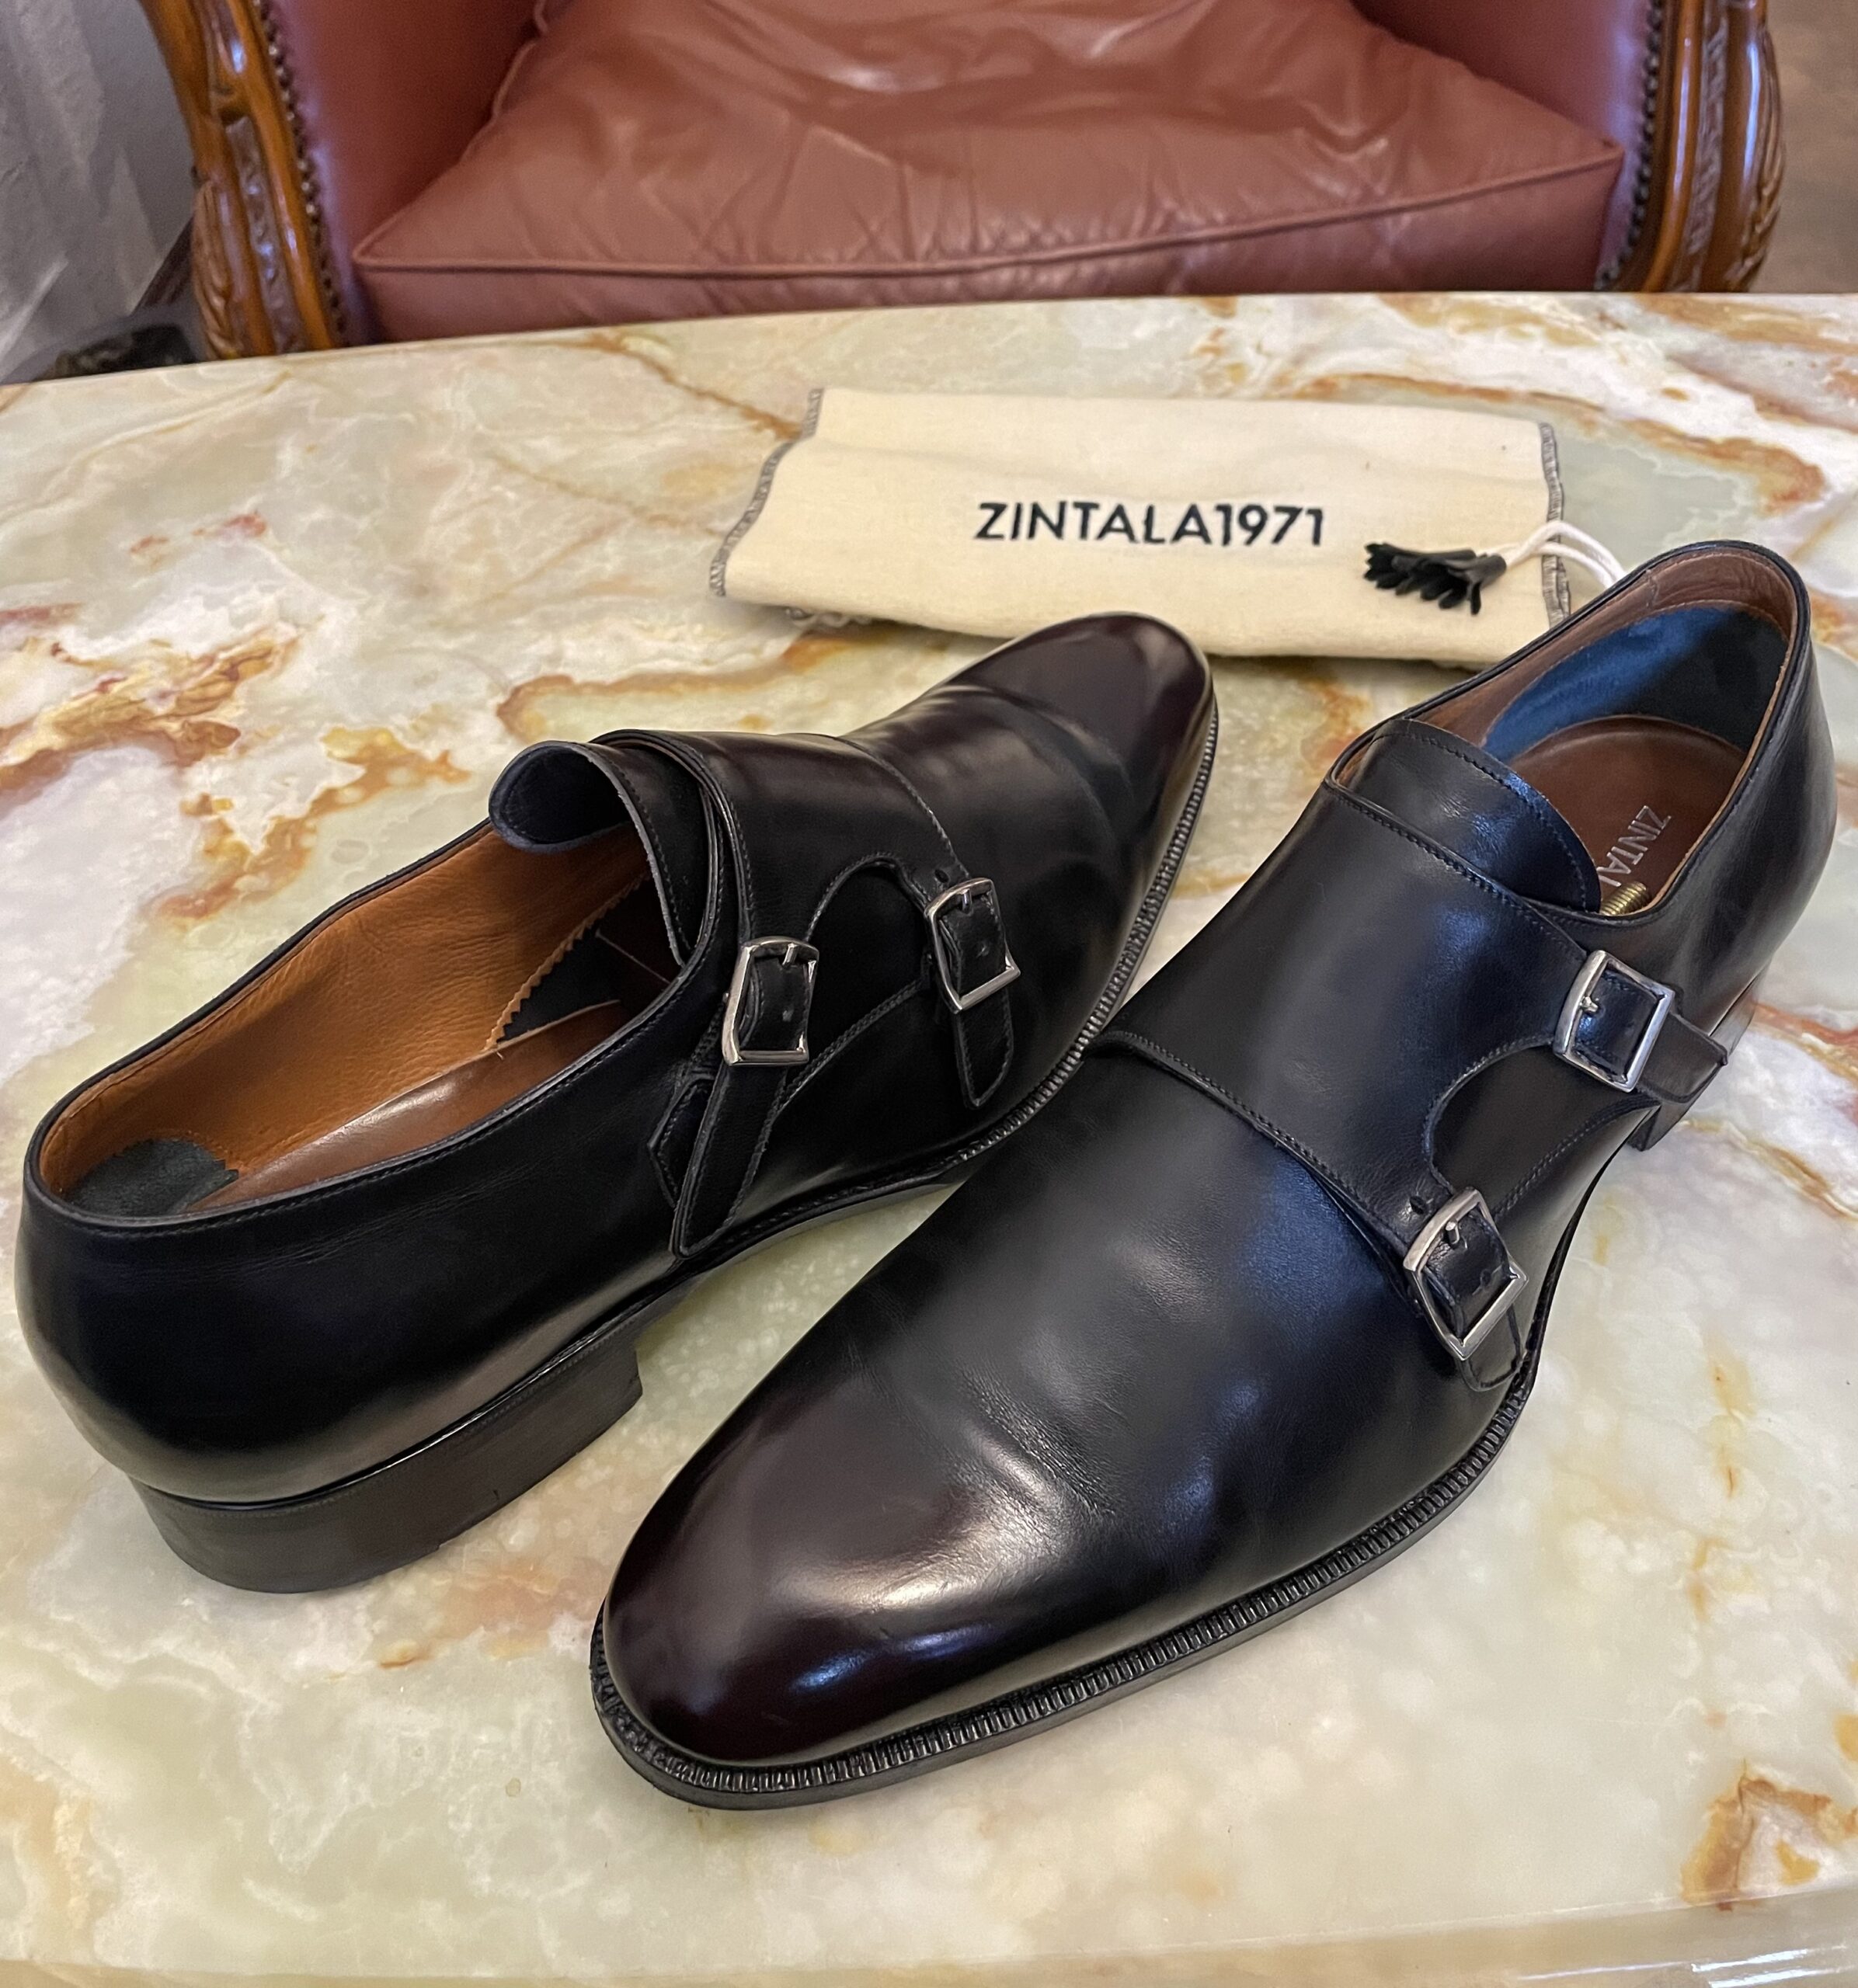 【ZINTALA 1971 ジンターラ】ダブルモンクストラップ靴シューズ 41 7 茶黒色グラデ